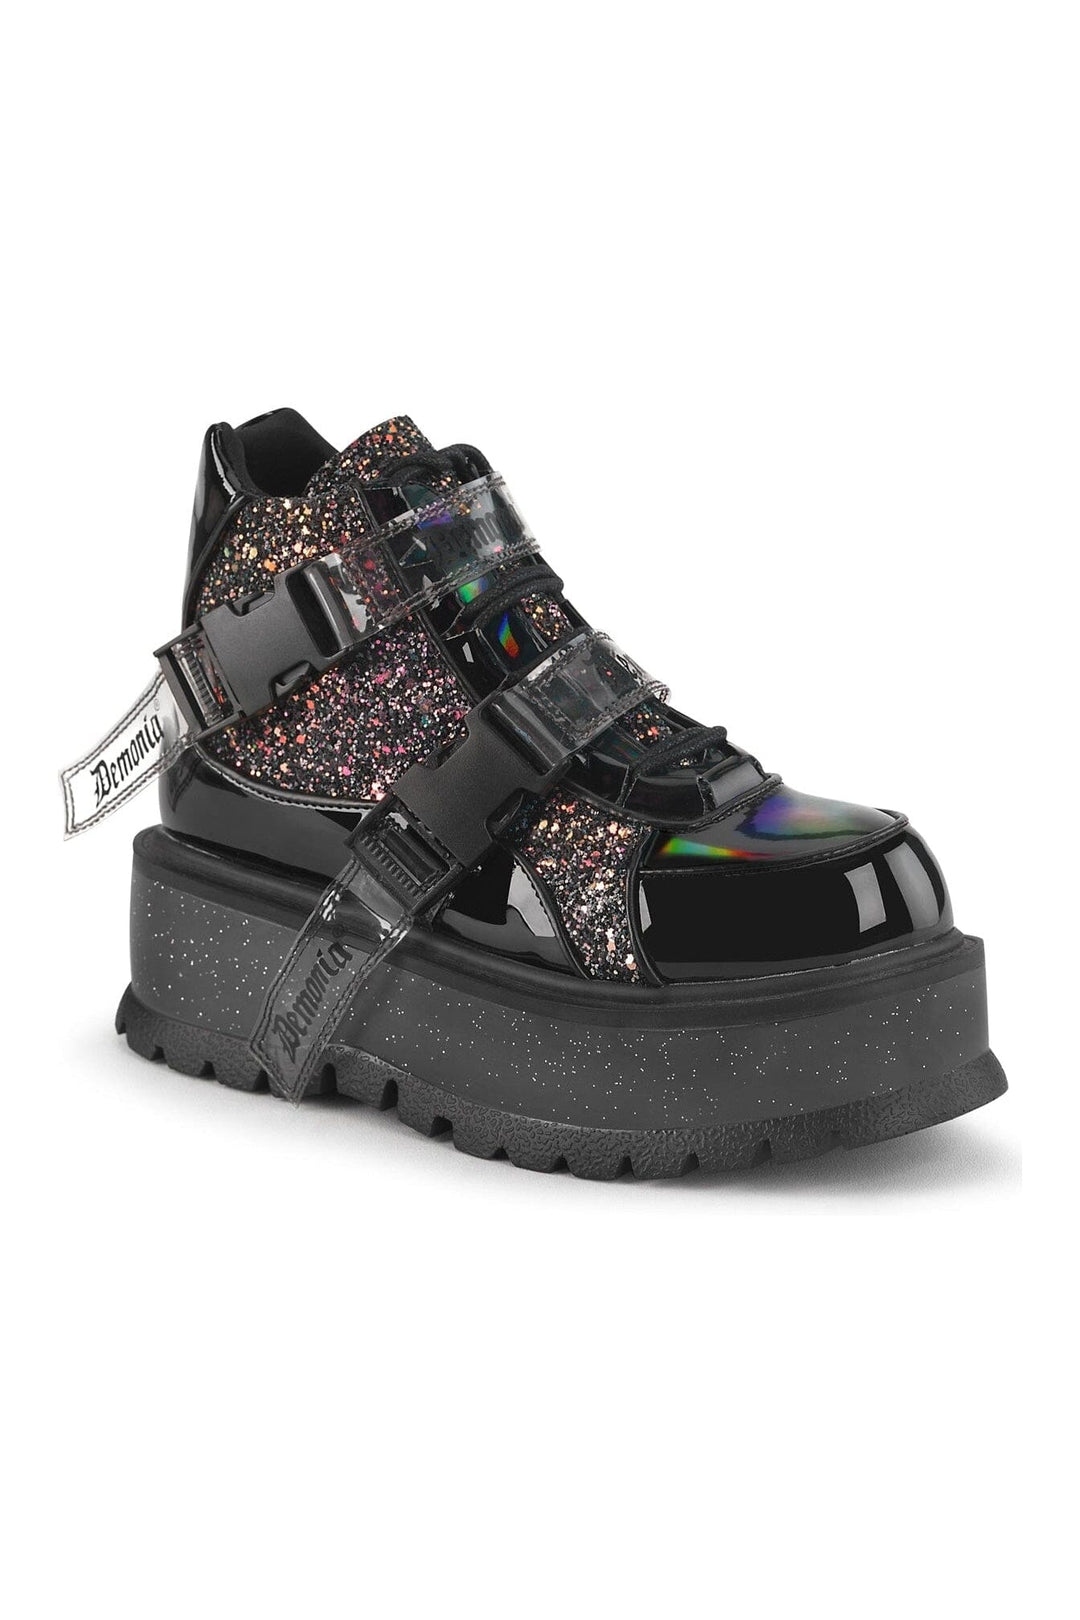 SLACKER-50 Black Glitter Ankle Boot-Ankle Boots-Demonia-Black-10-Glitter-SEXYSHOES.COM